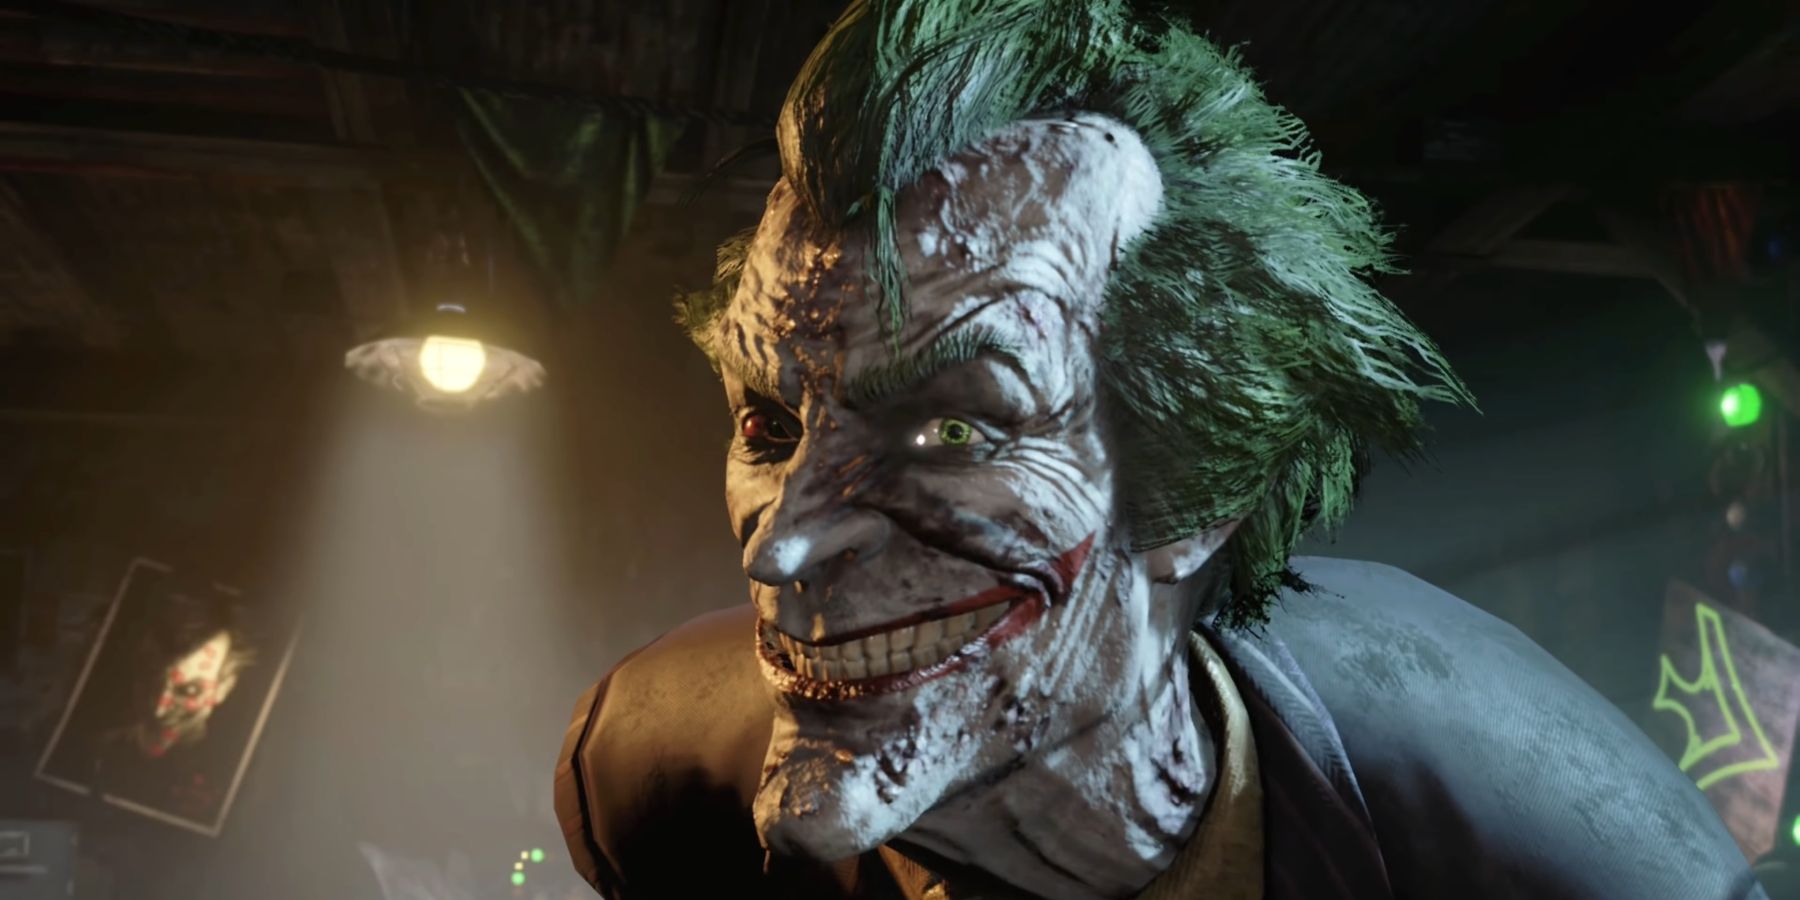 The Joker revealing his Titan affliction in Batman Arkham City